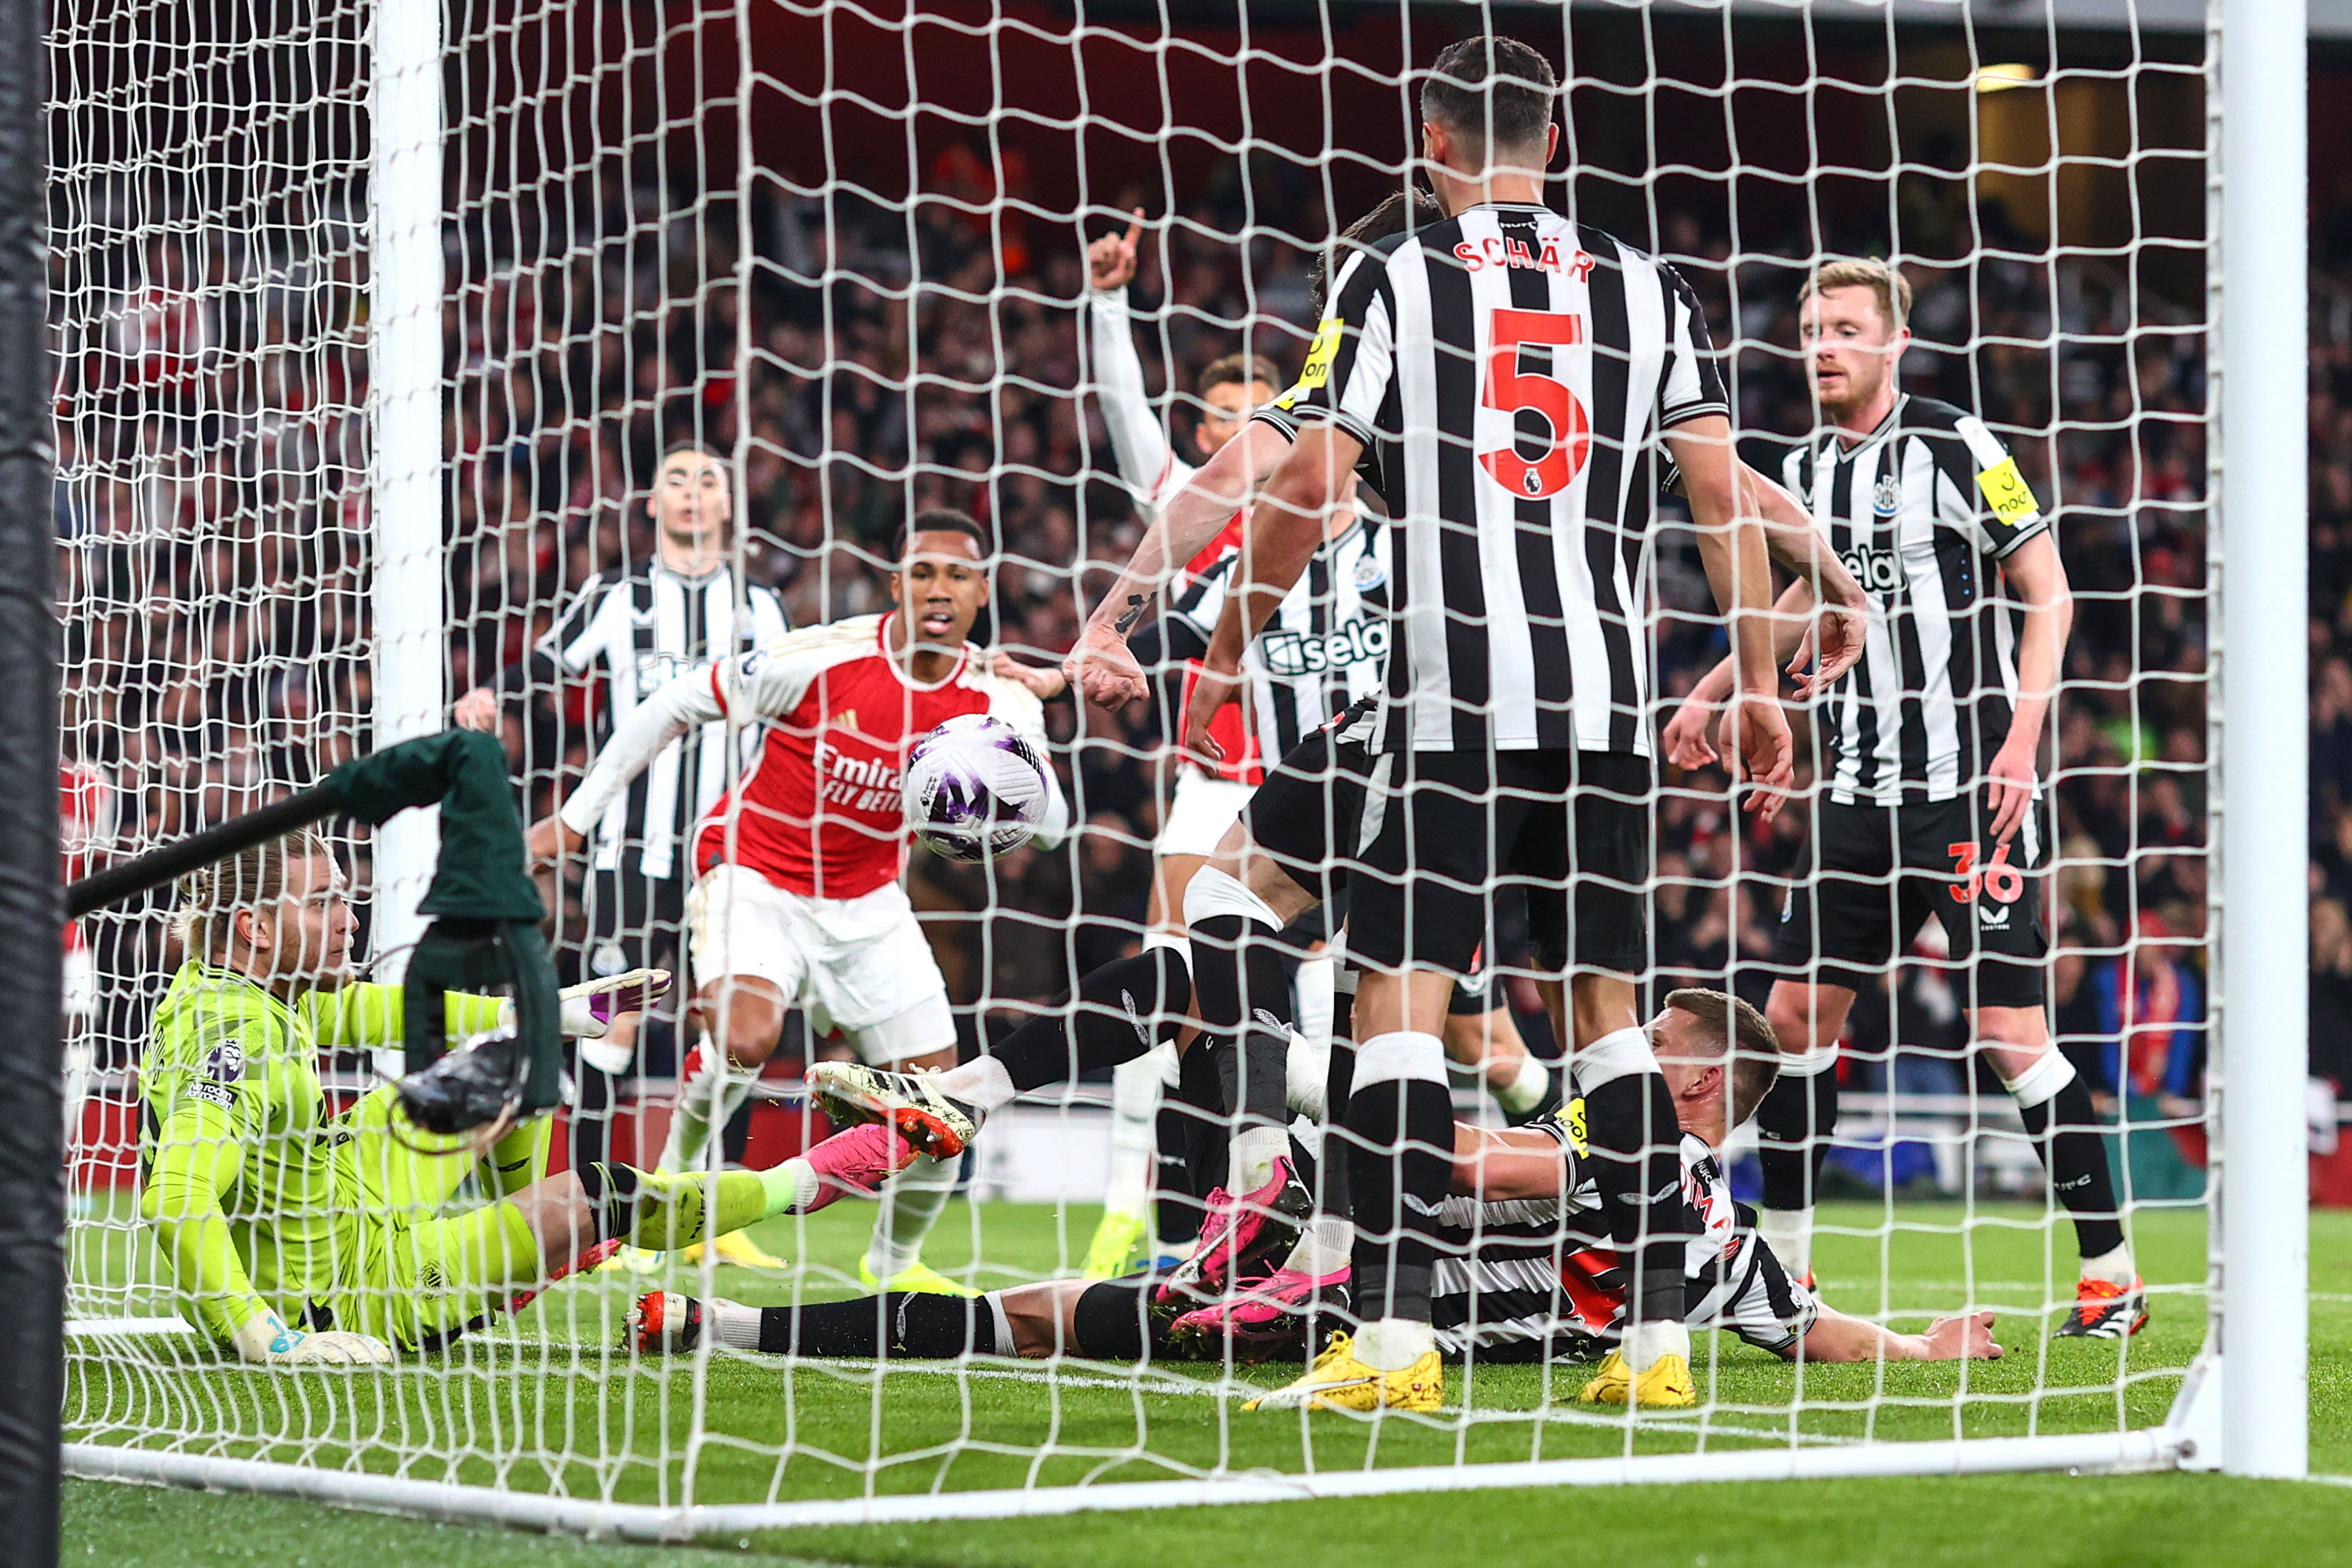 Arsenal 4-1 Newcastle United: Saturday Night's Alright as Gunners ease past Geordies 